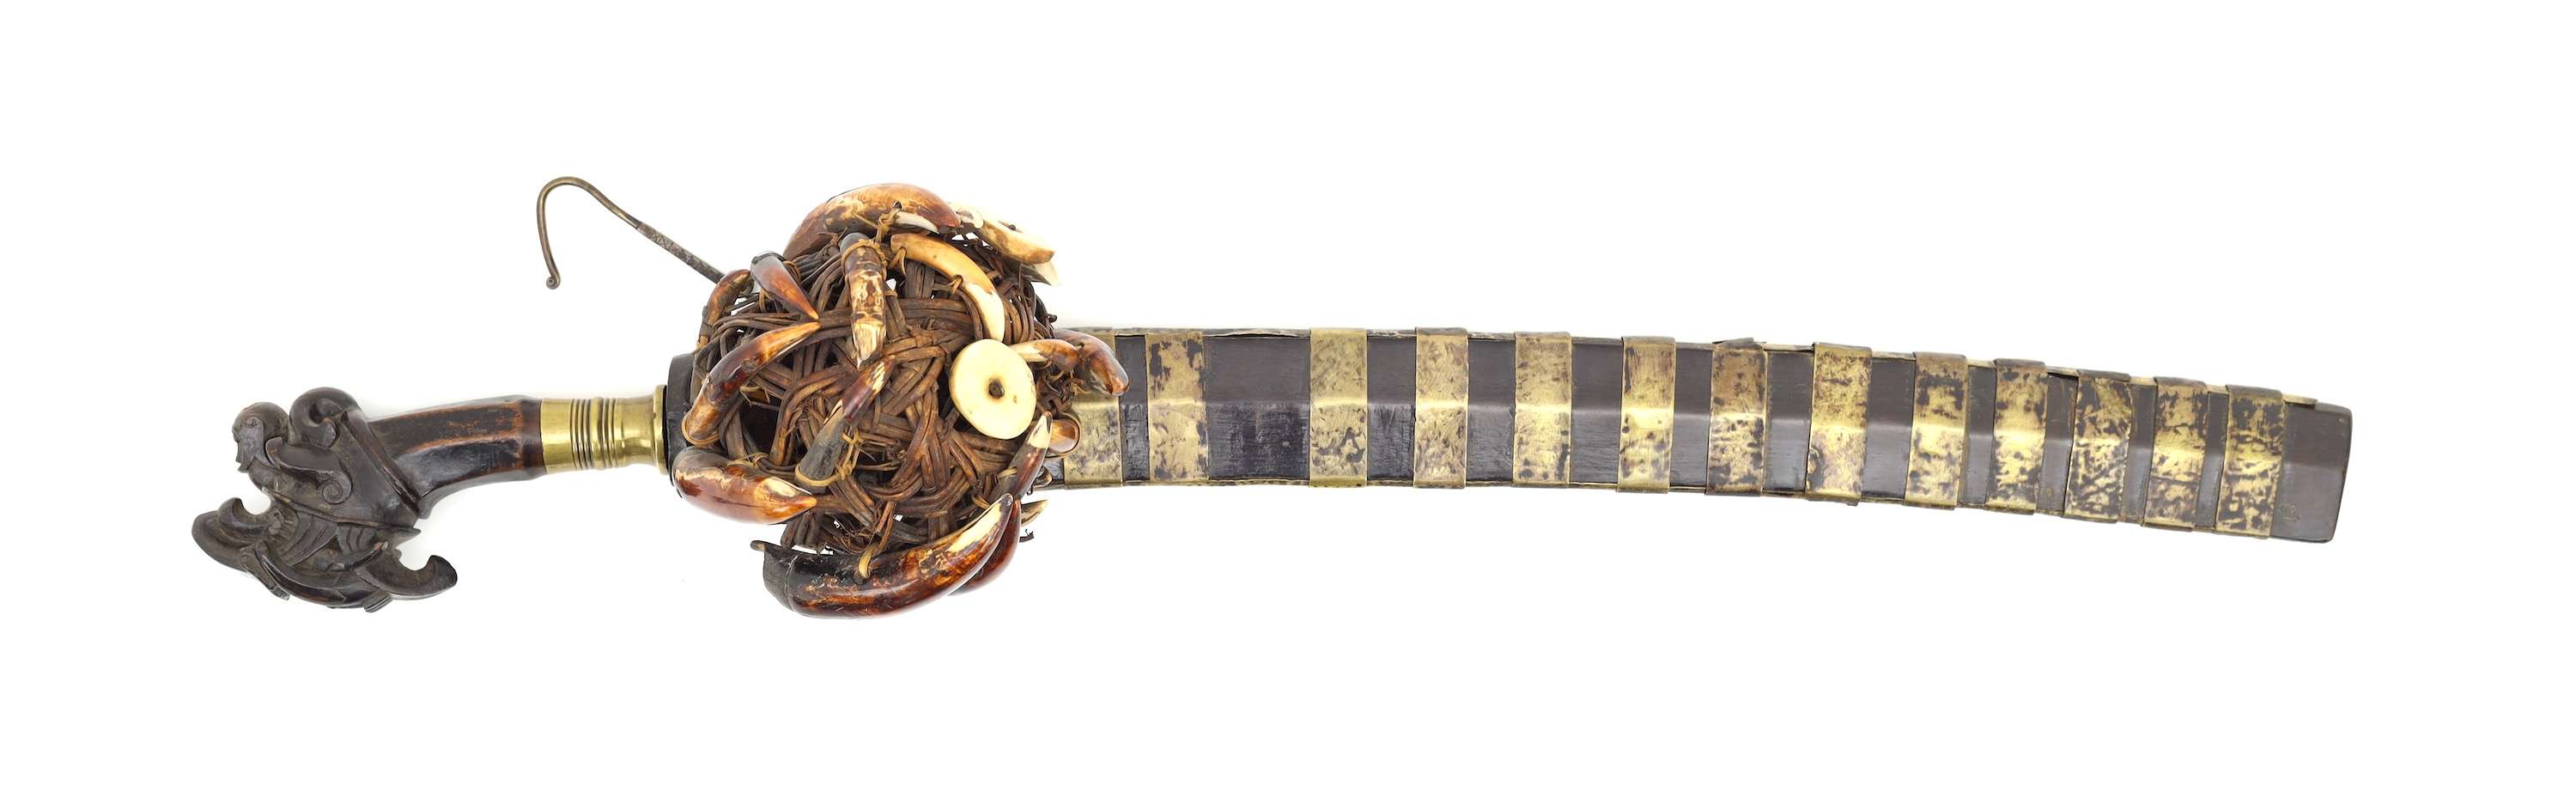 Fine and complete Nias sword called belatu